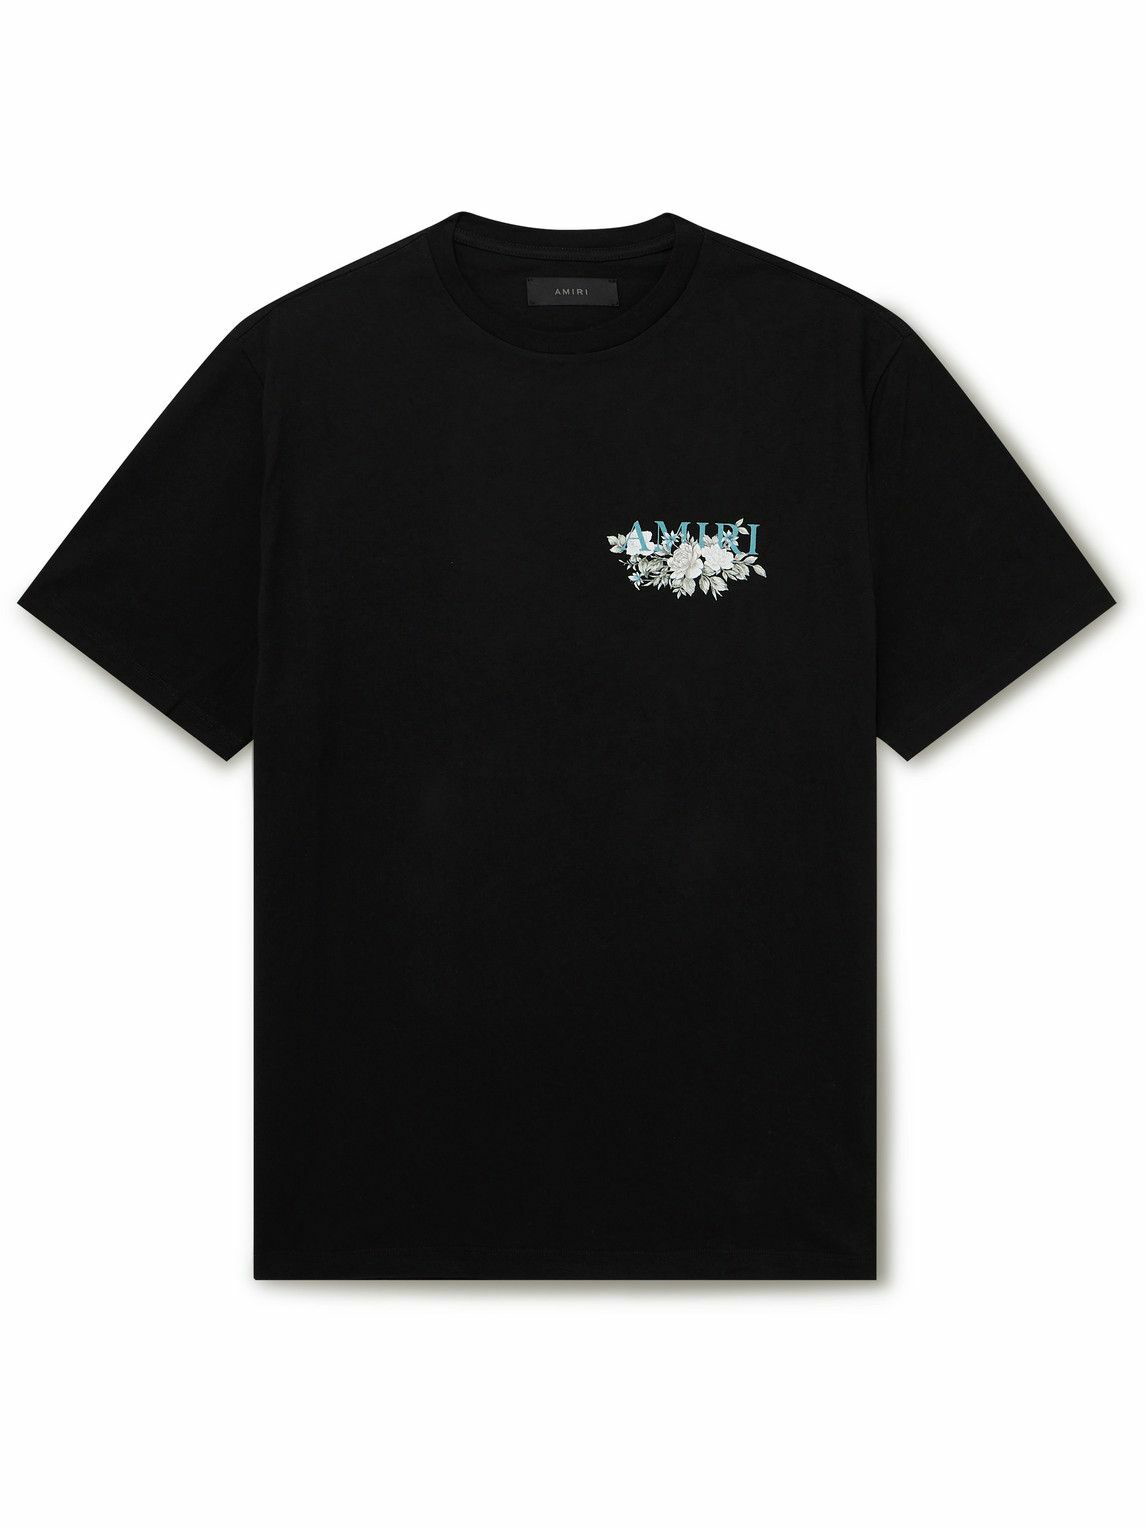 AMIRI - Logo-Print Cotton-Jersey T-Shirt - Black Amiri